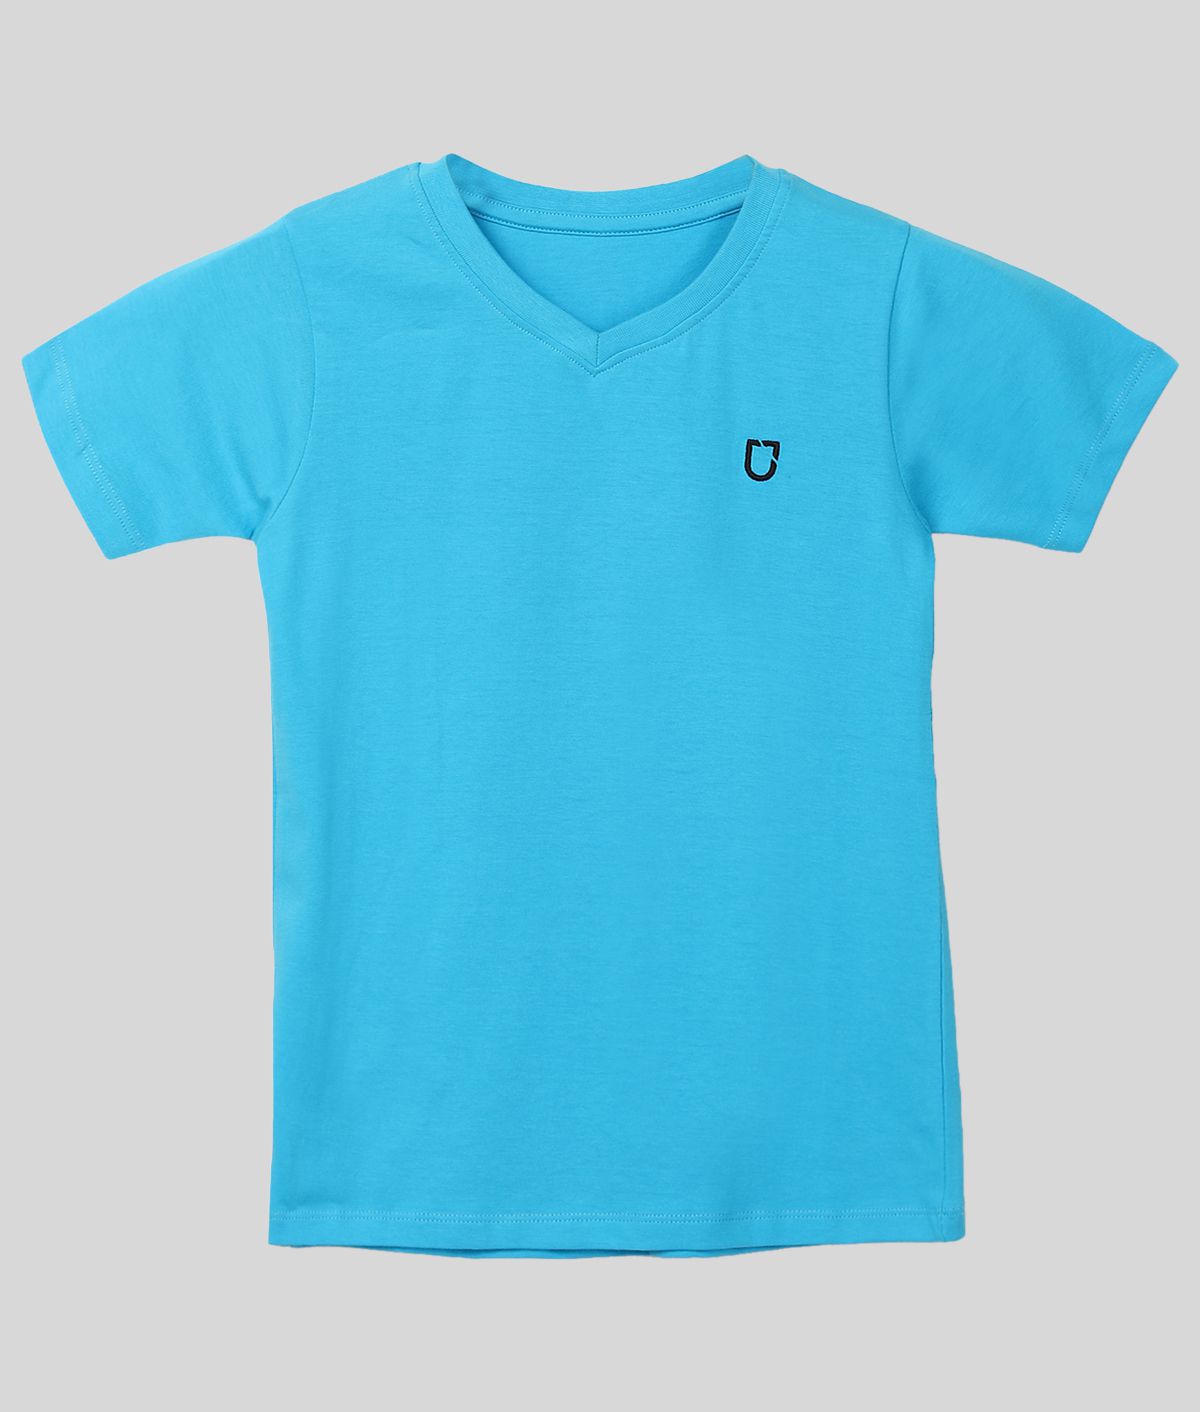 Urbano Juniors - Light Blue Cotton Boy's T-Shirt ( Pack of 1 )